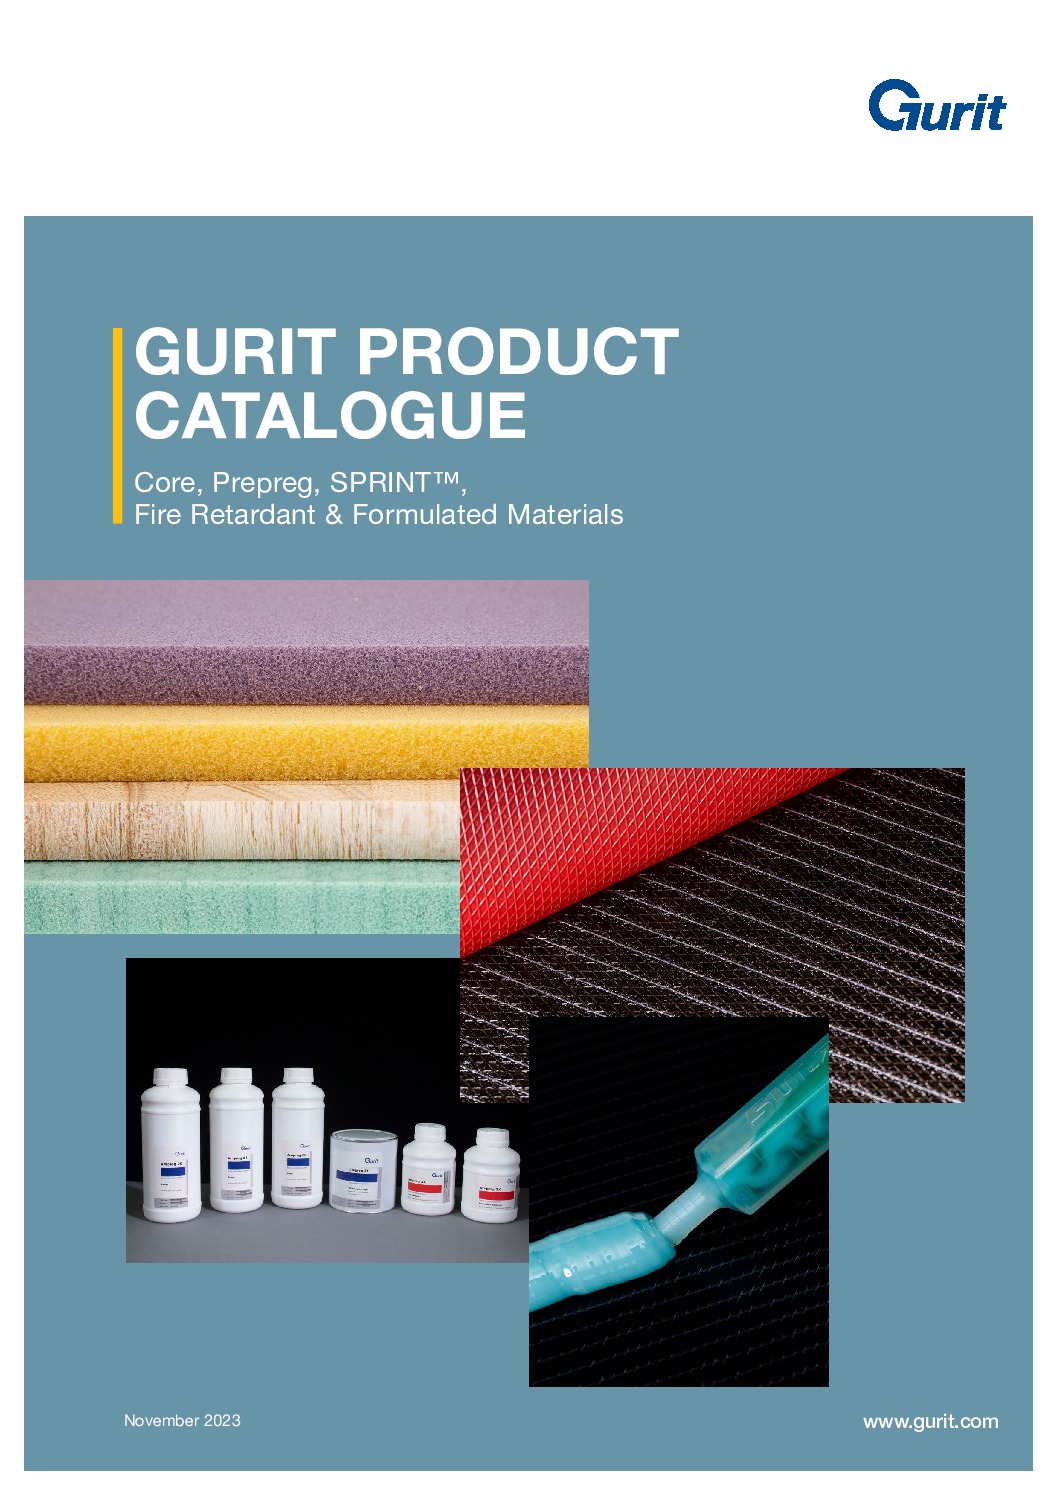 Gurit Product Catalogue November 2022